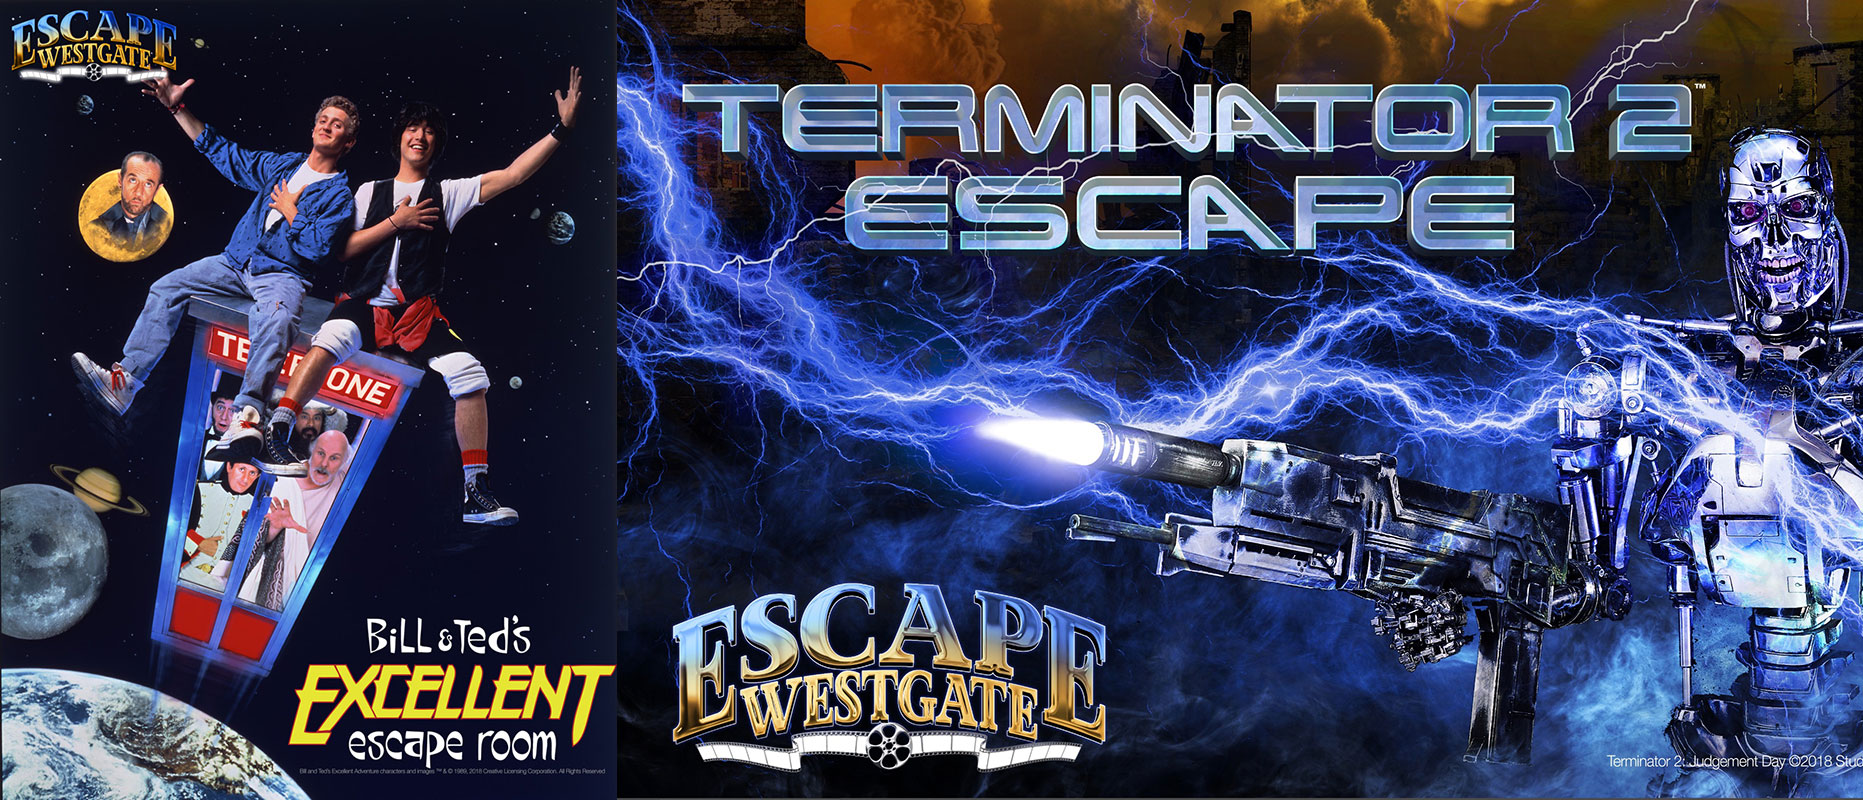 Bill & Ted's Excellent Escape Room / Terminator 2: Escape at Escape Westgate